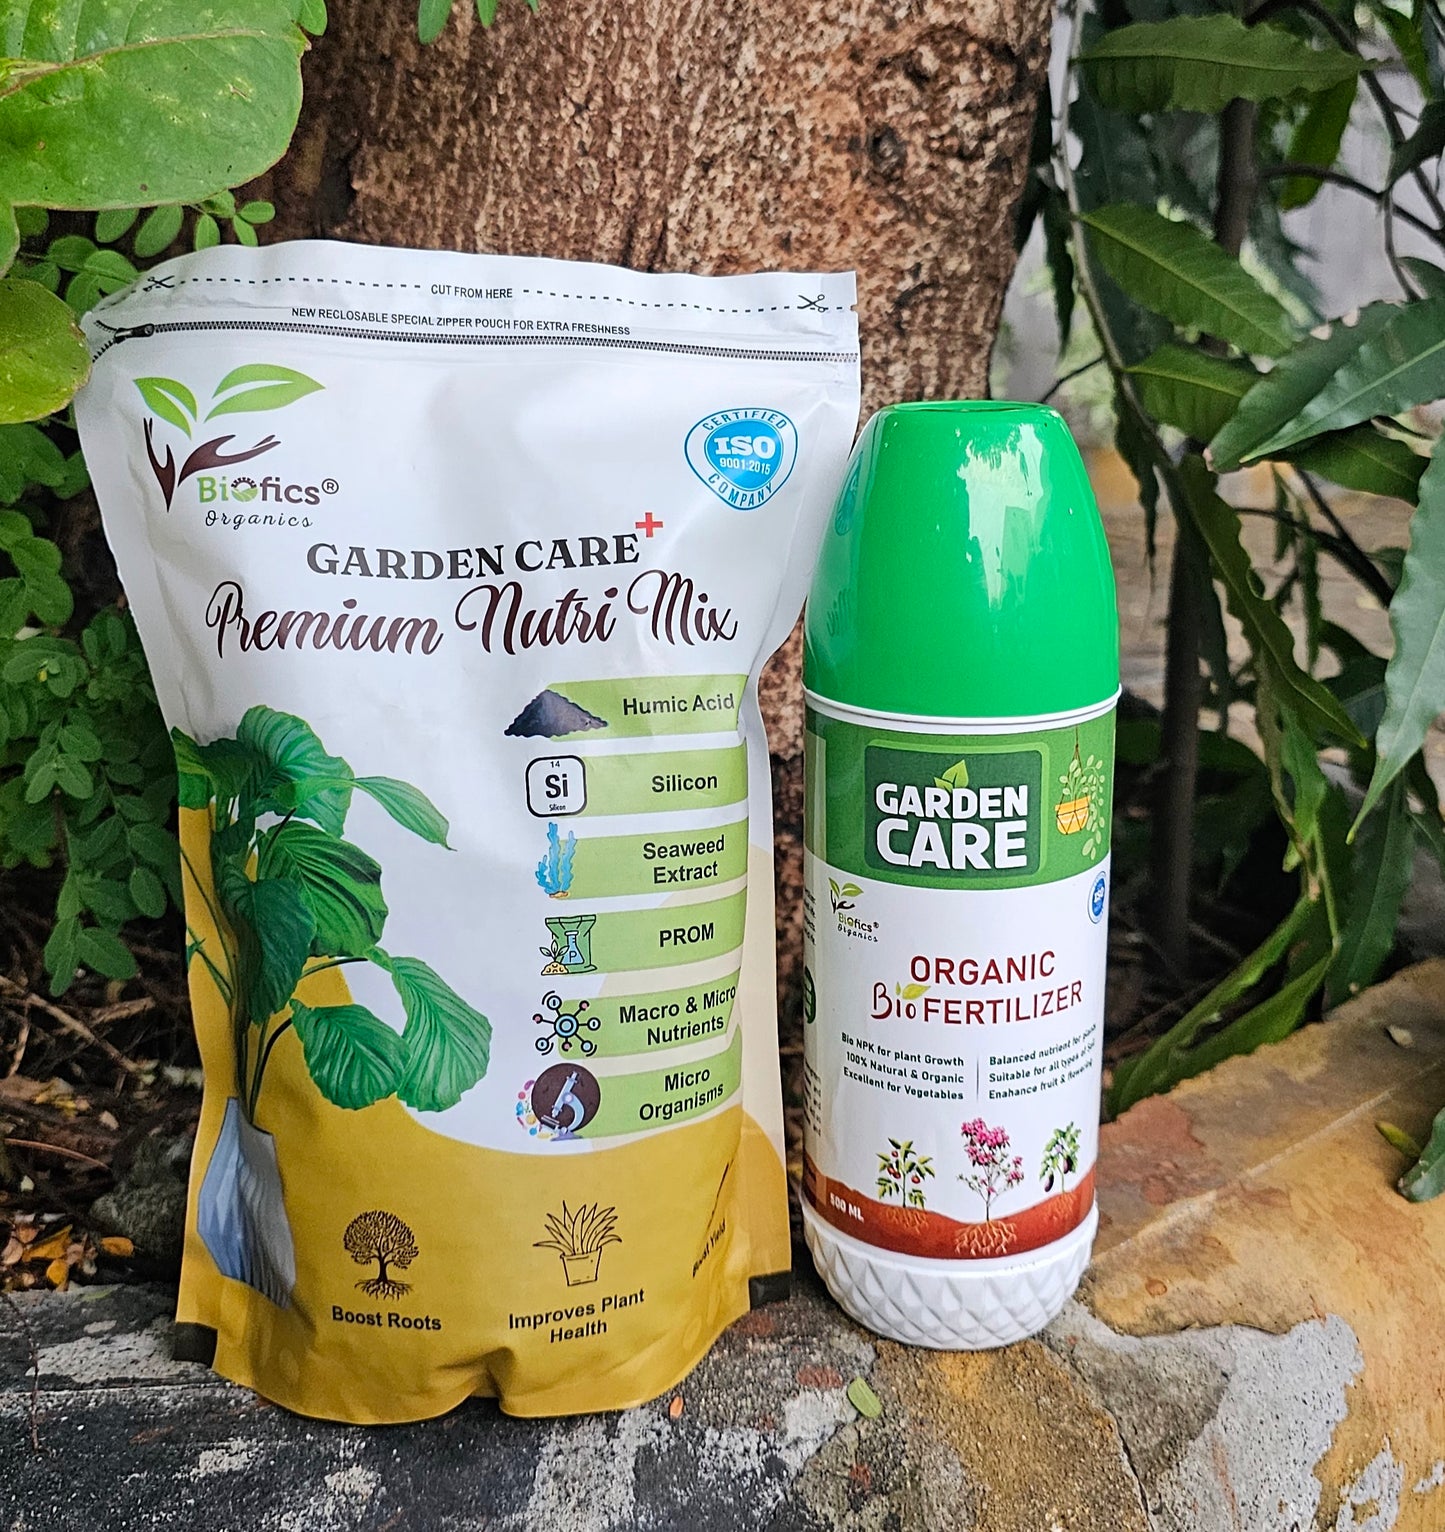 Biofics Garden Care Liquid Fertilizer & Granuels  Combo Offer